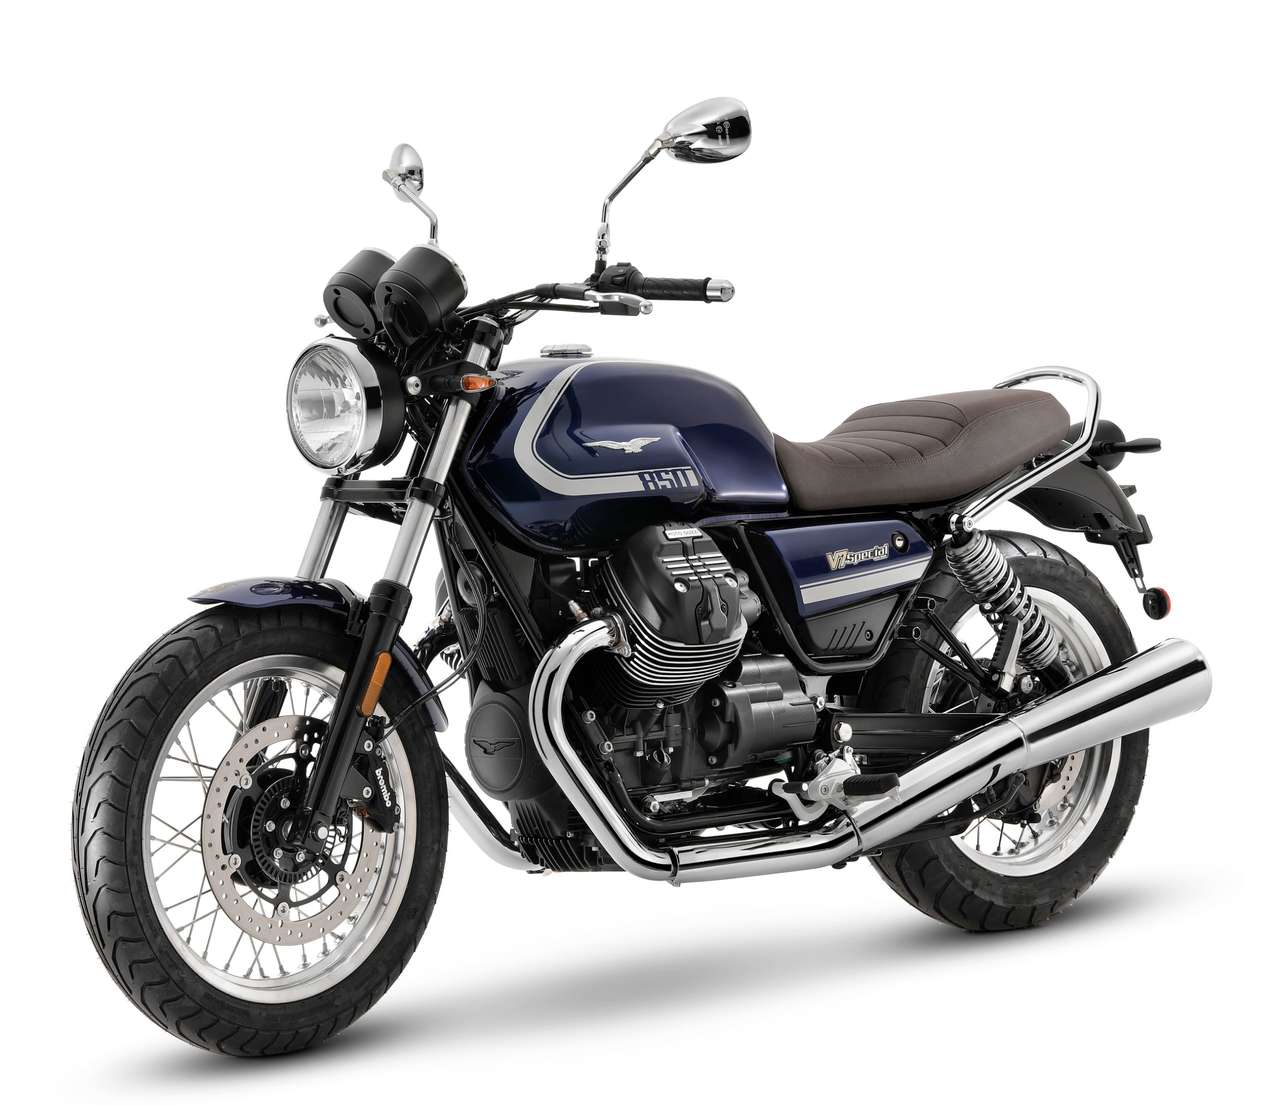 Moto Guzzi V7 Special 2021